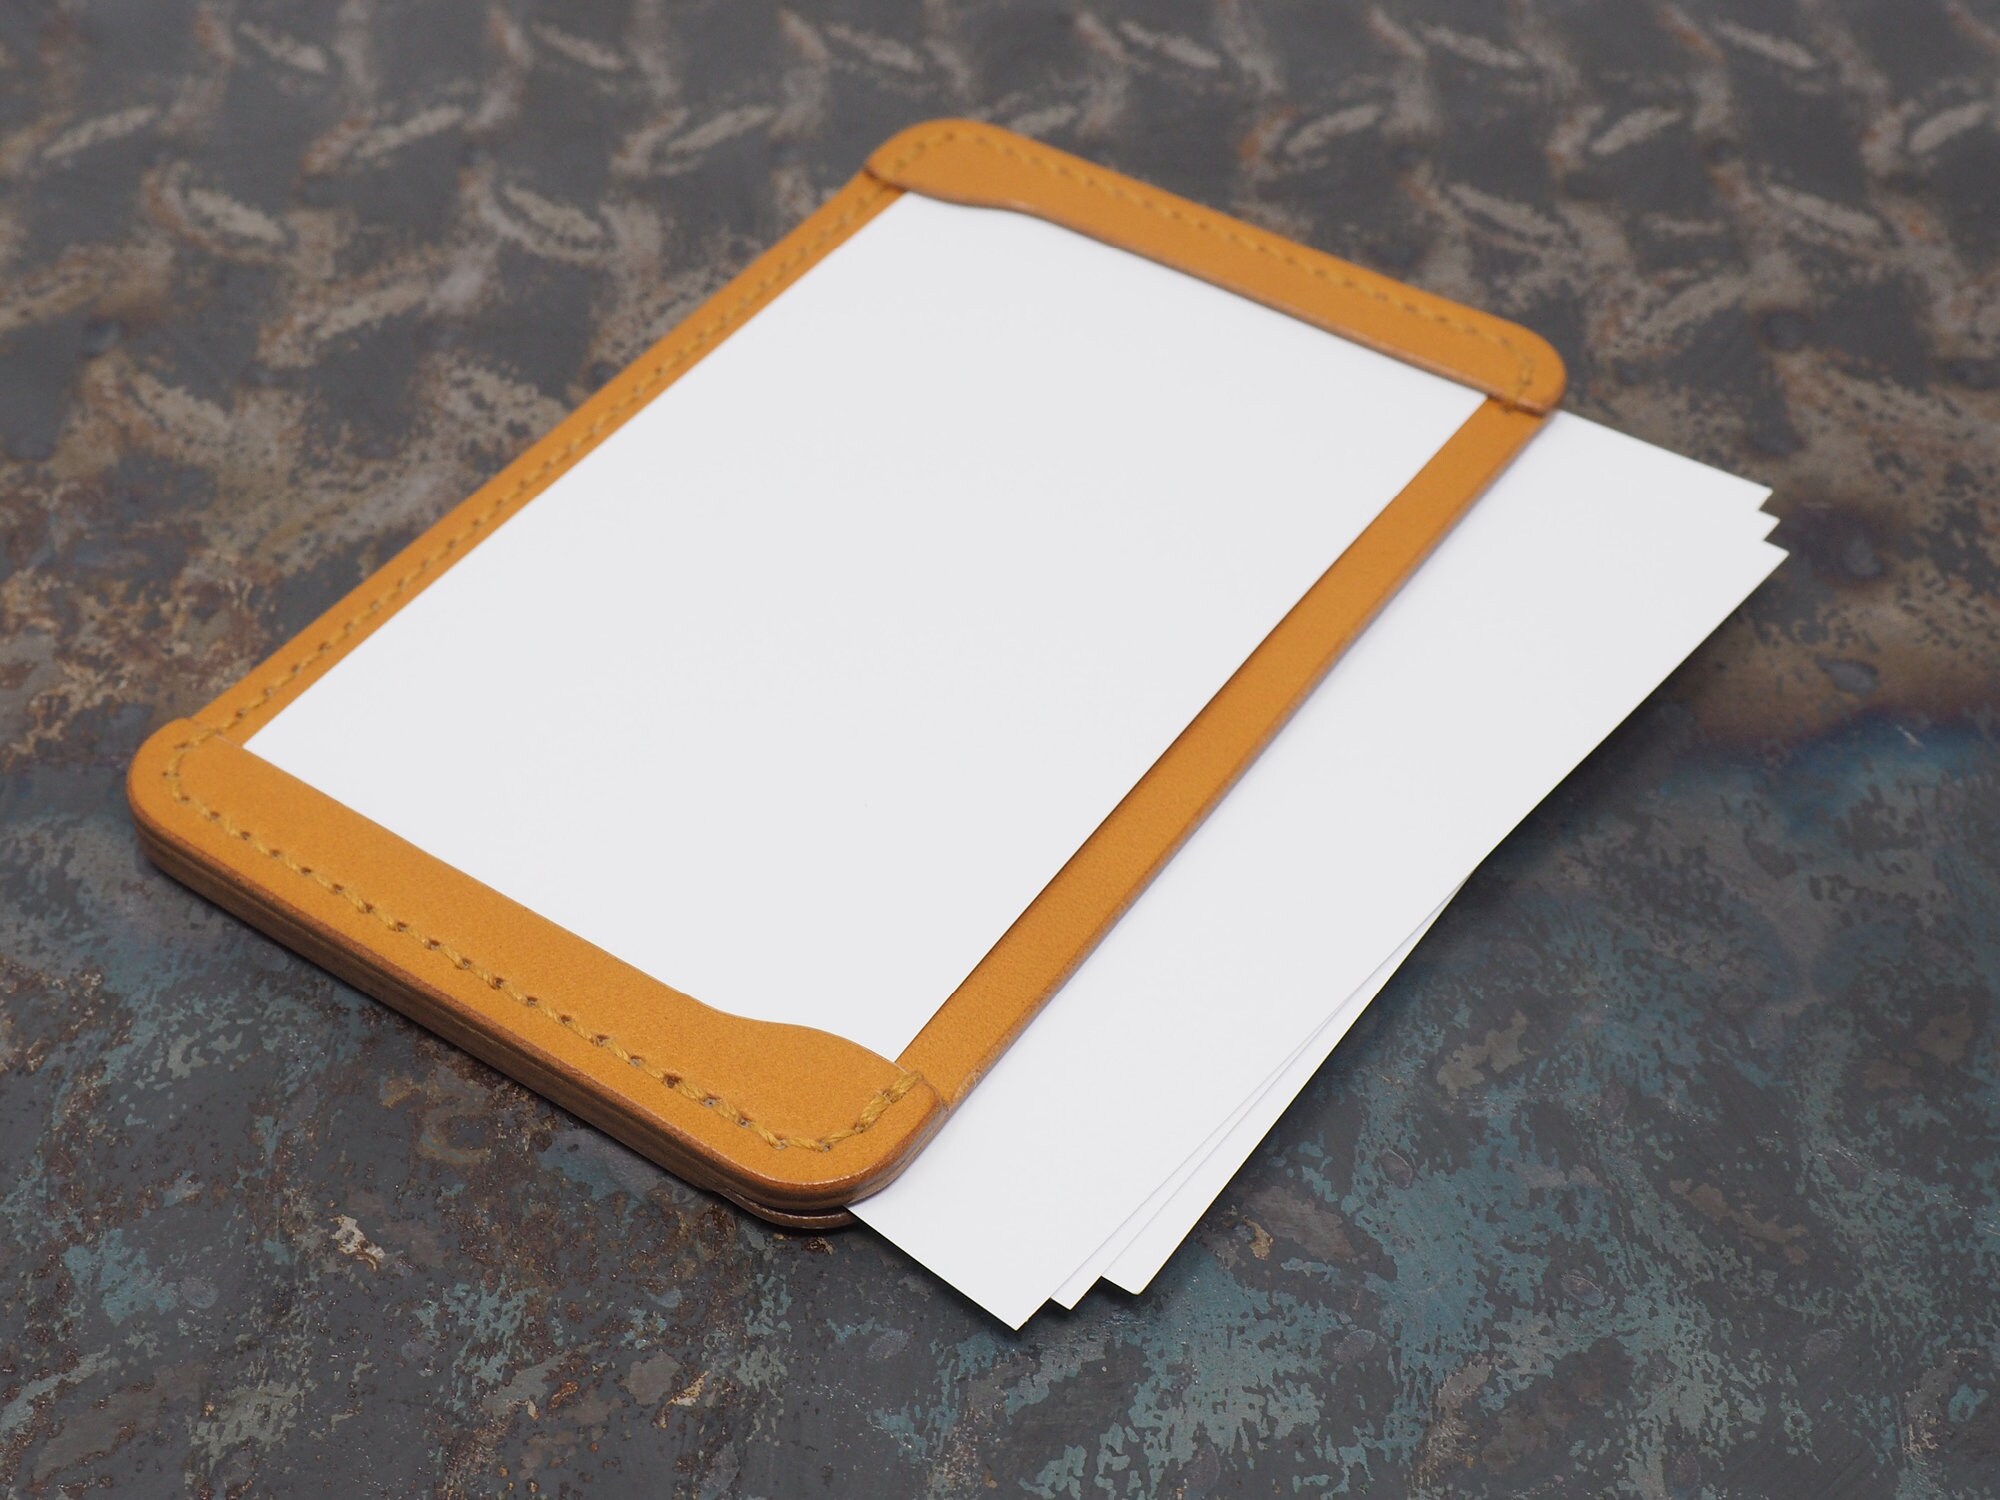 Handmade 3-by-5 3x5 / 77x127mm Index Card Holder Memo Notepad Jotter Pad /  Pocket Briefcase Cognac / Chestnut / Dark Brown 